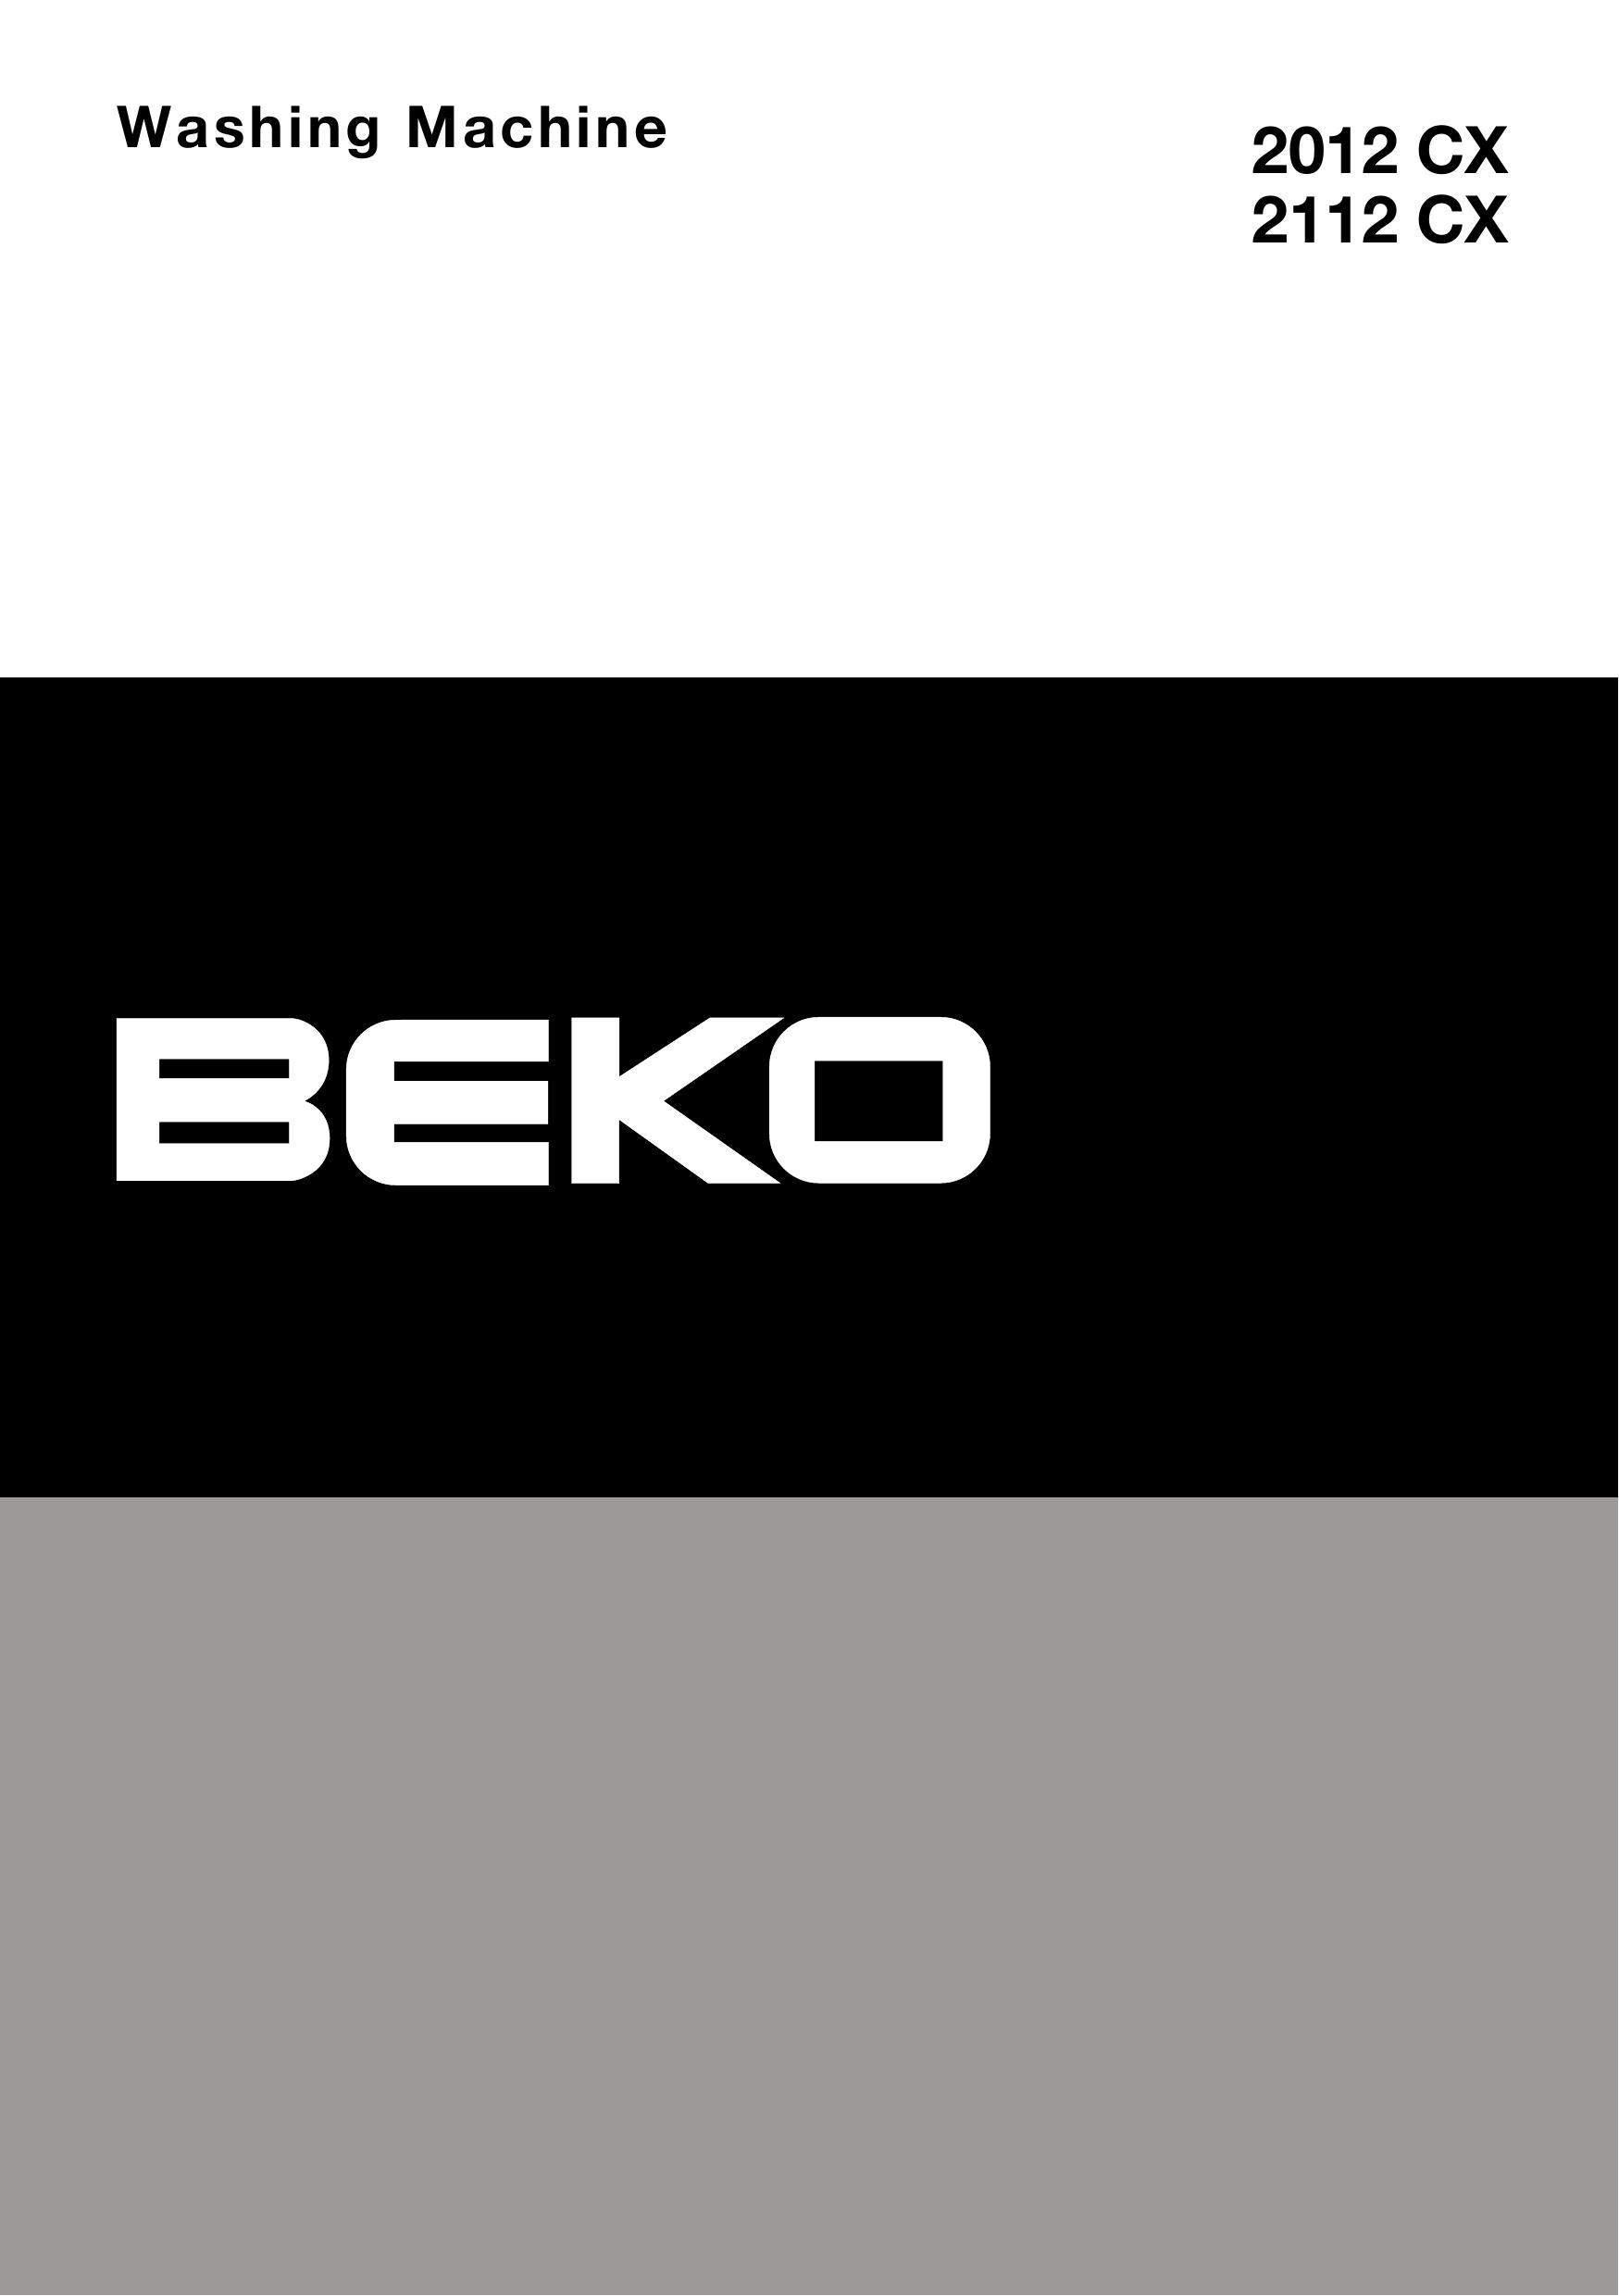 Beko 2012 CX Washer User Manual